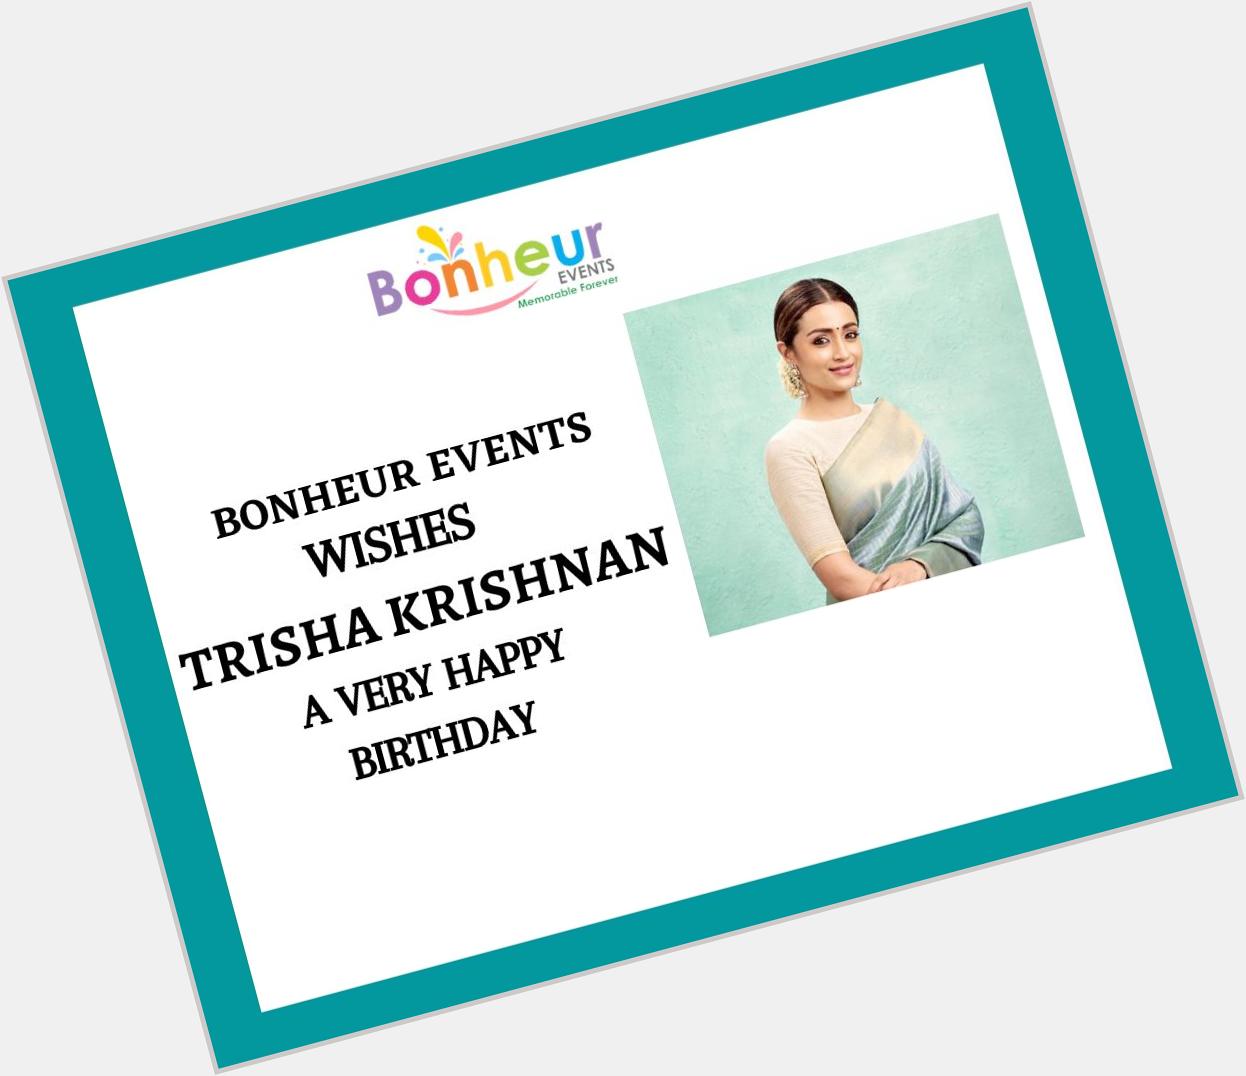 Bonheur Events Wishes Trisha Krishnan A Very Happy Birthday. 